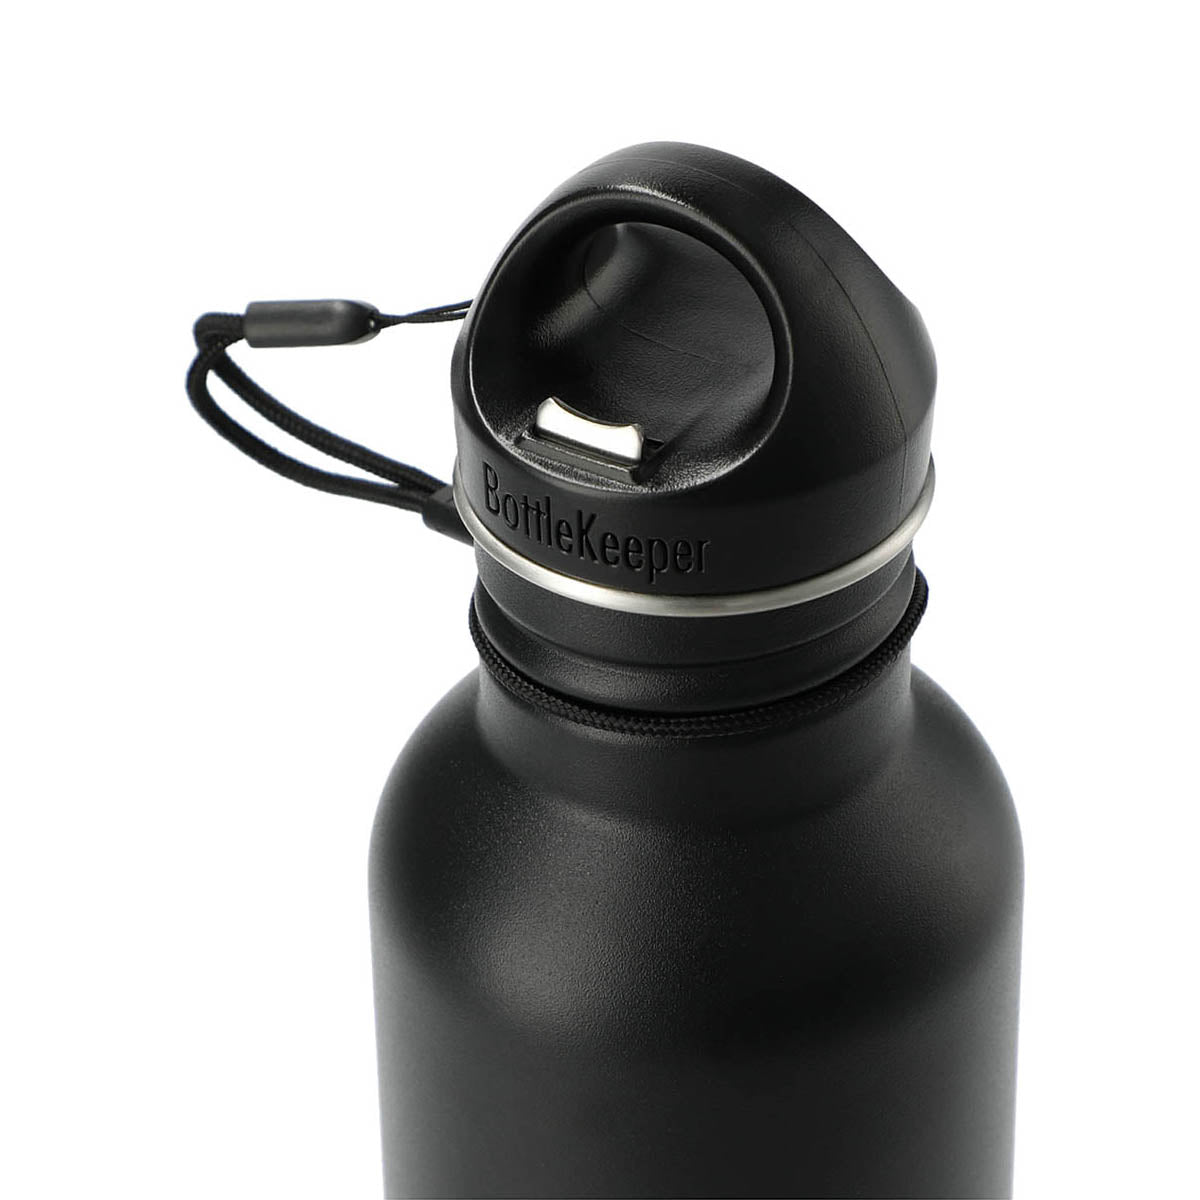 BottleKeeper Charcoal The Standard 2.0